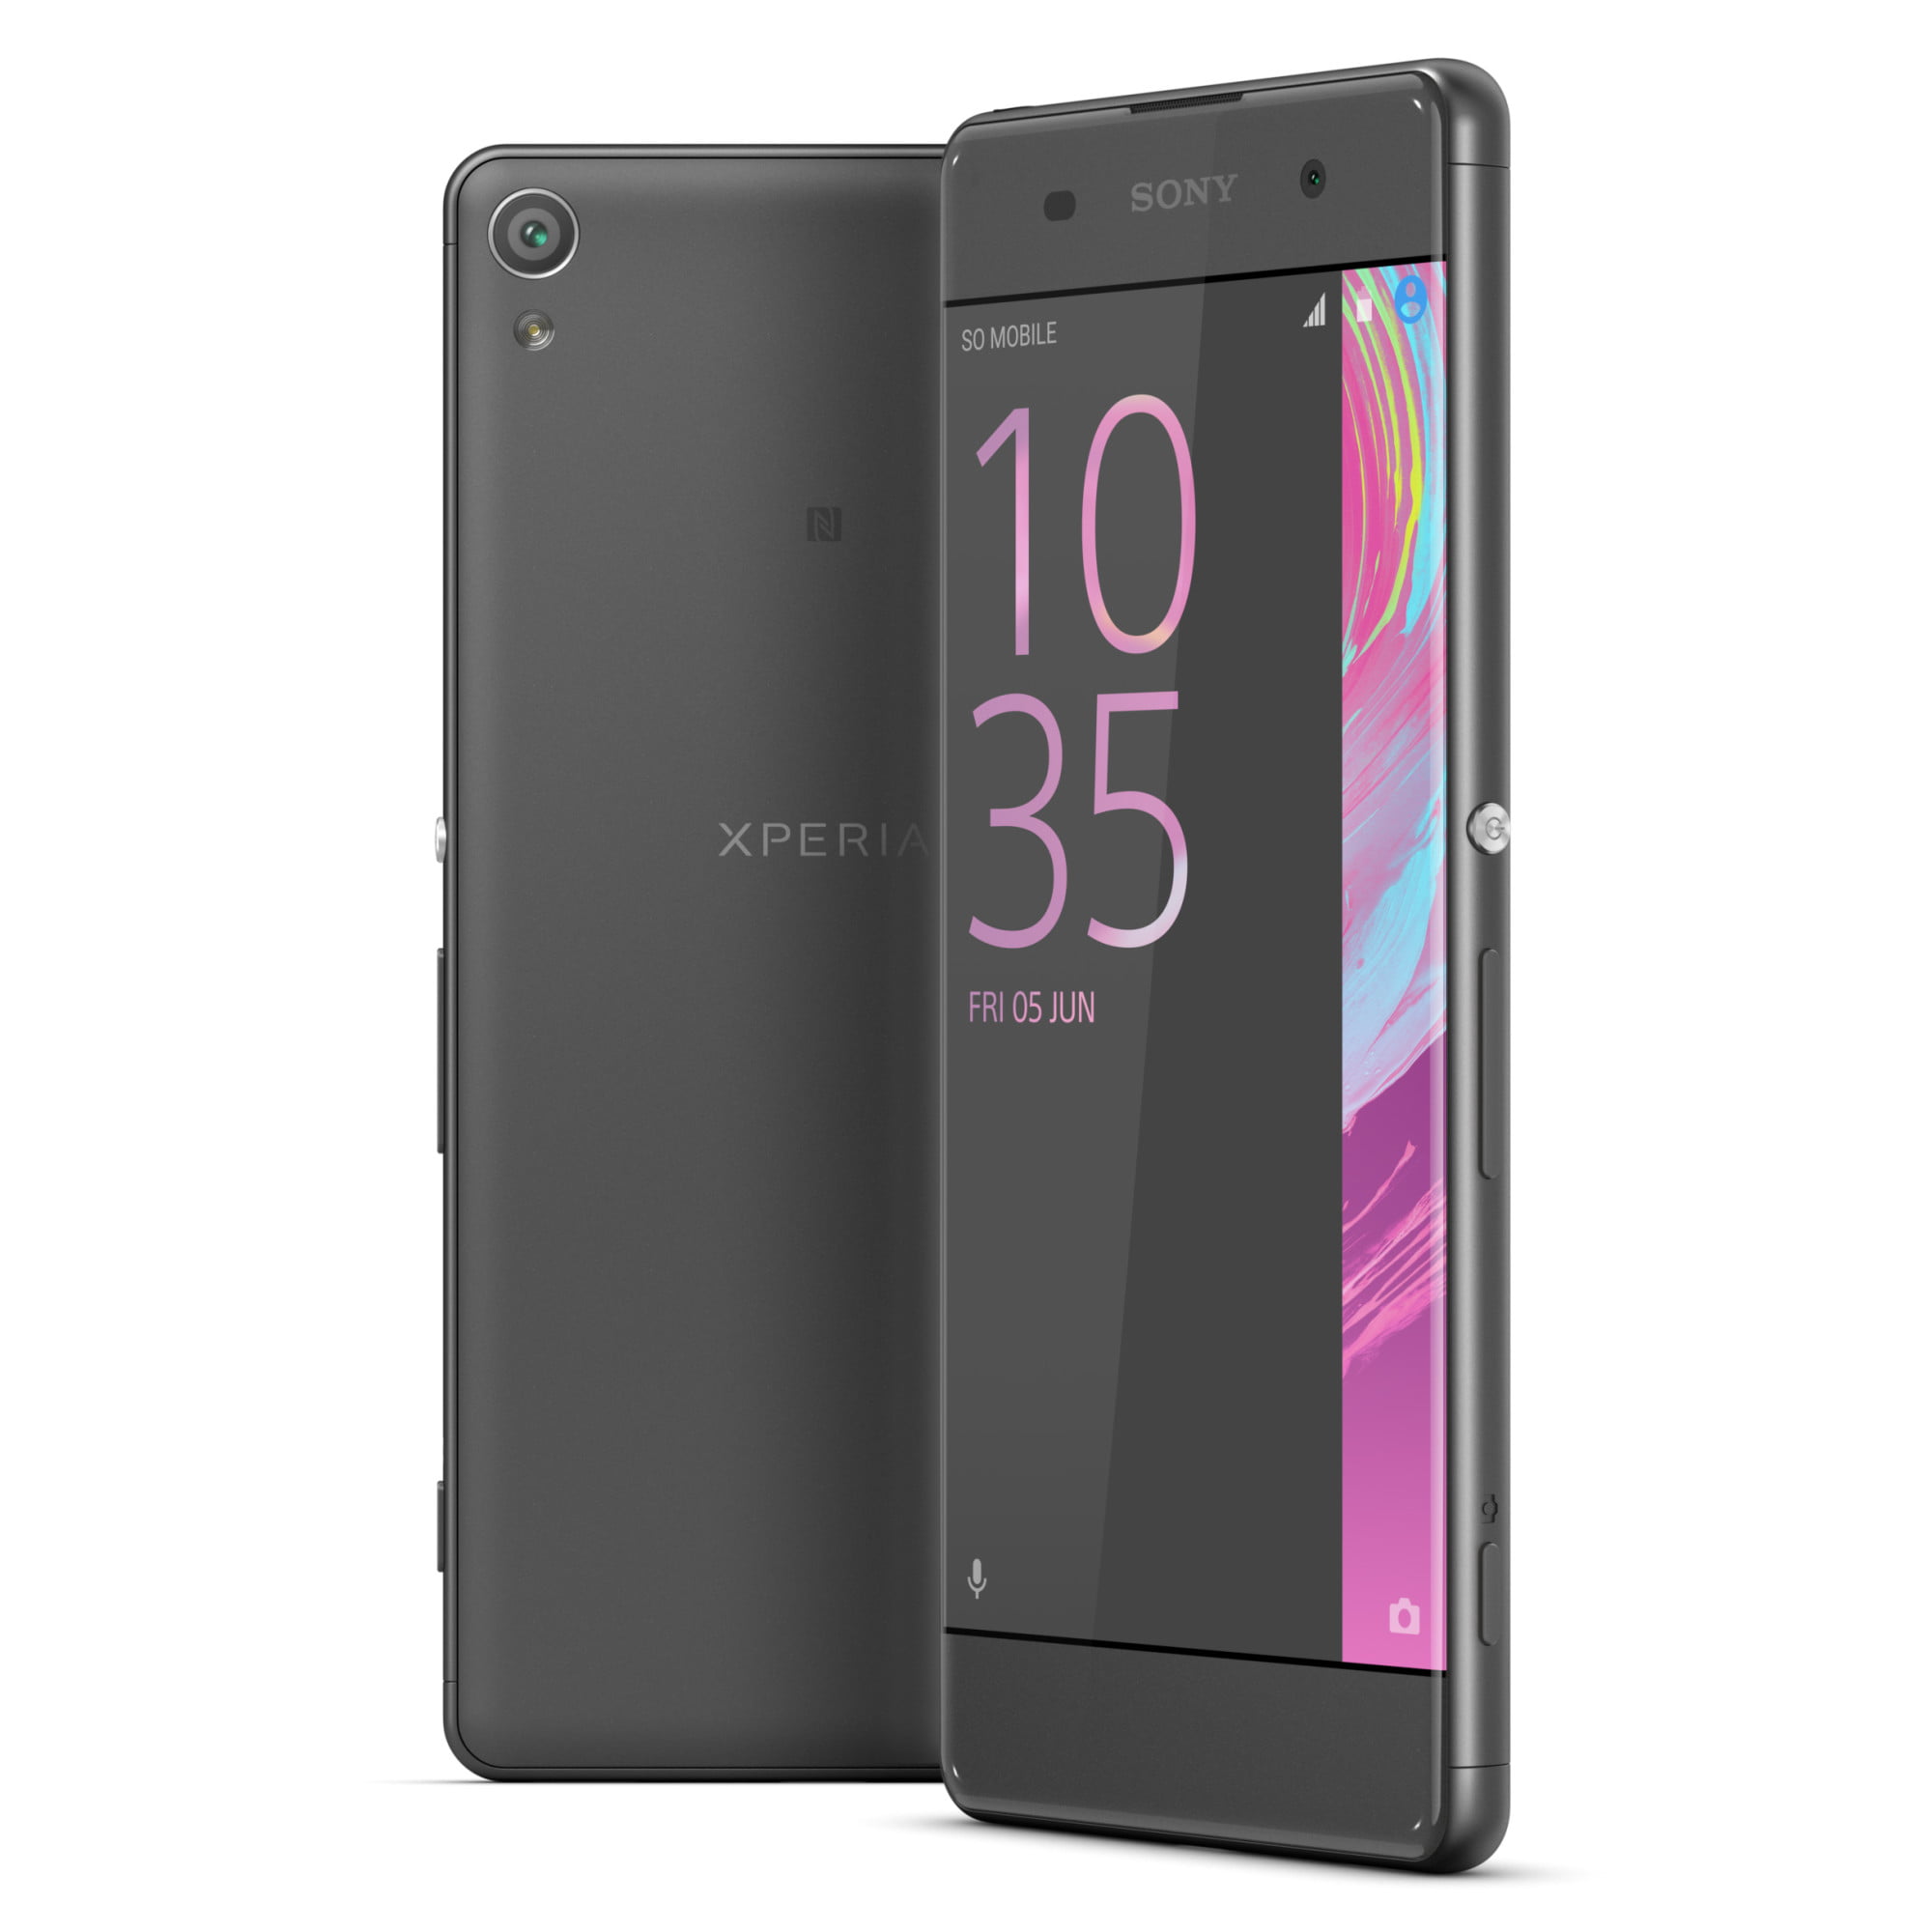 Sony Xperia XA 16GB 5-Inch Smartphone, Unlocked - Graphite -